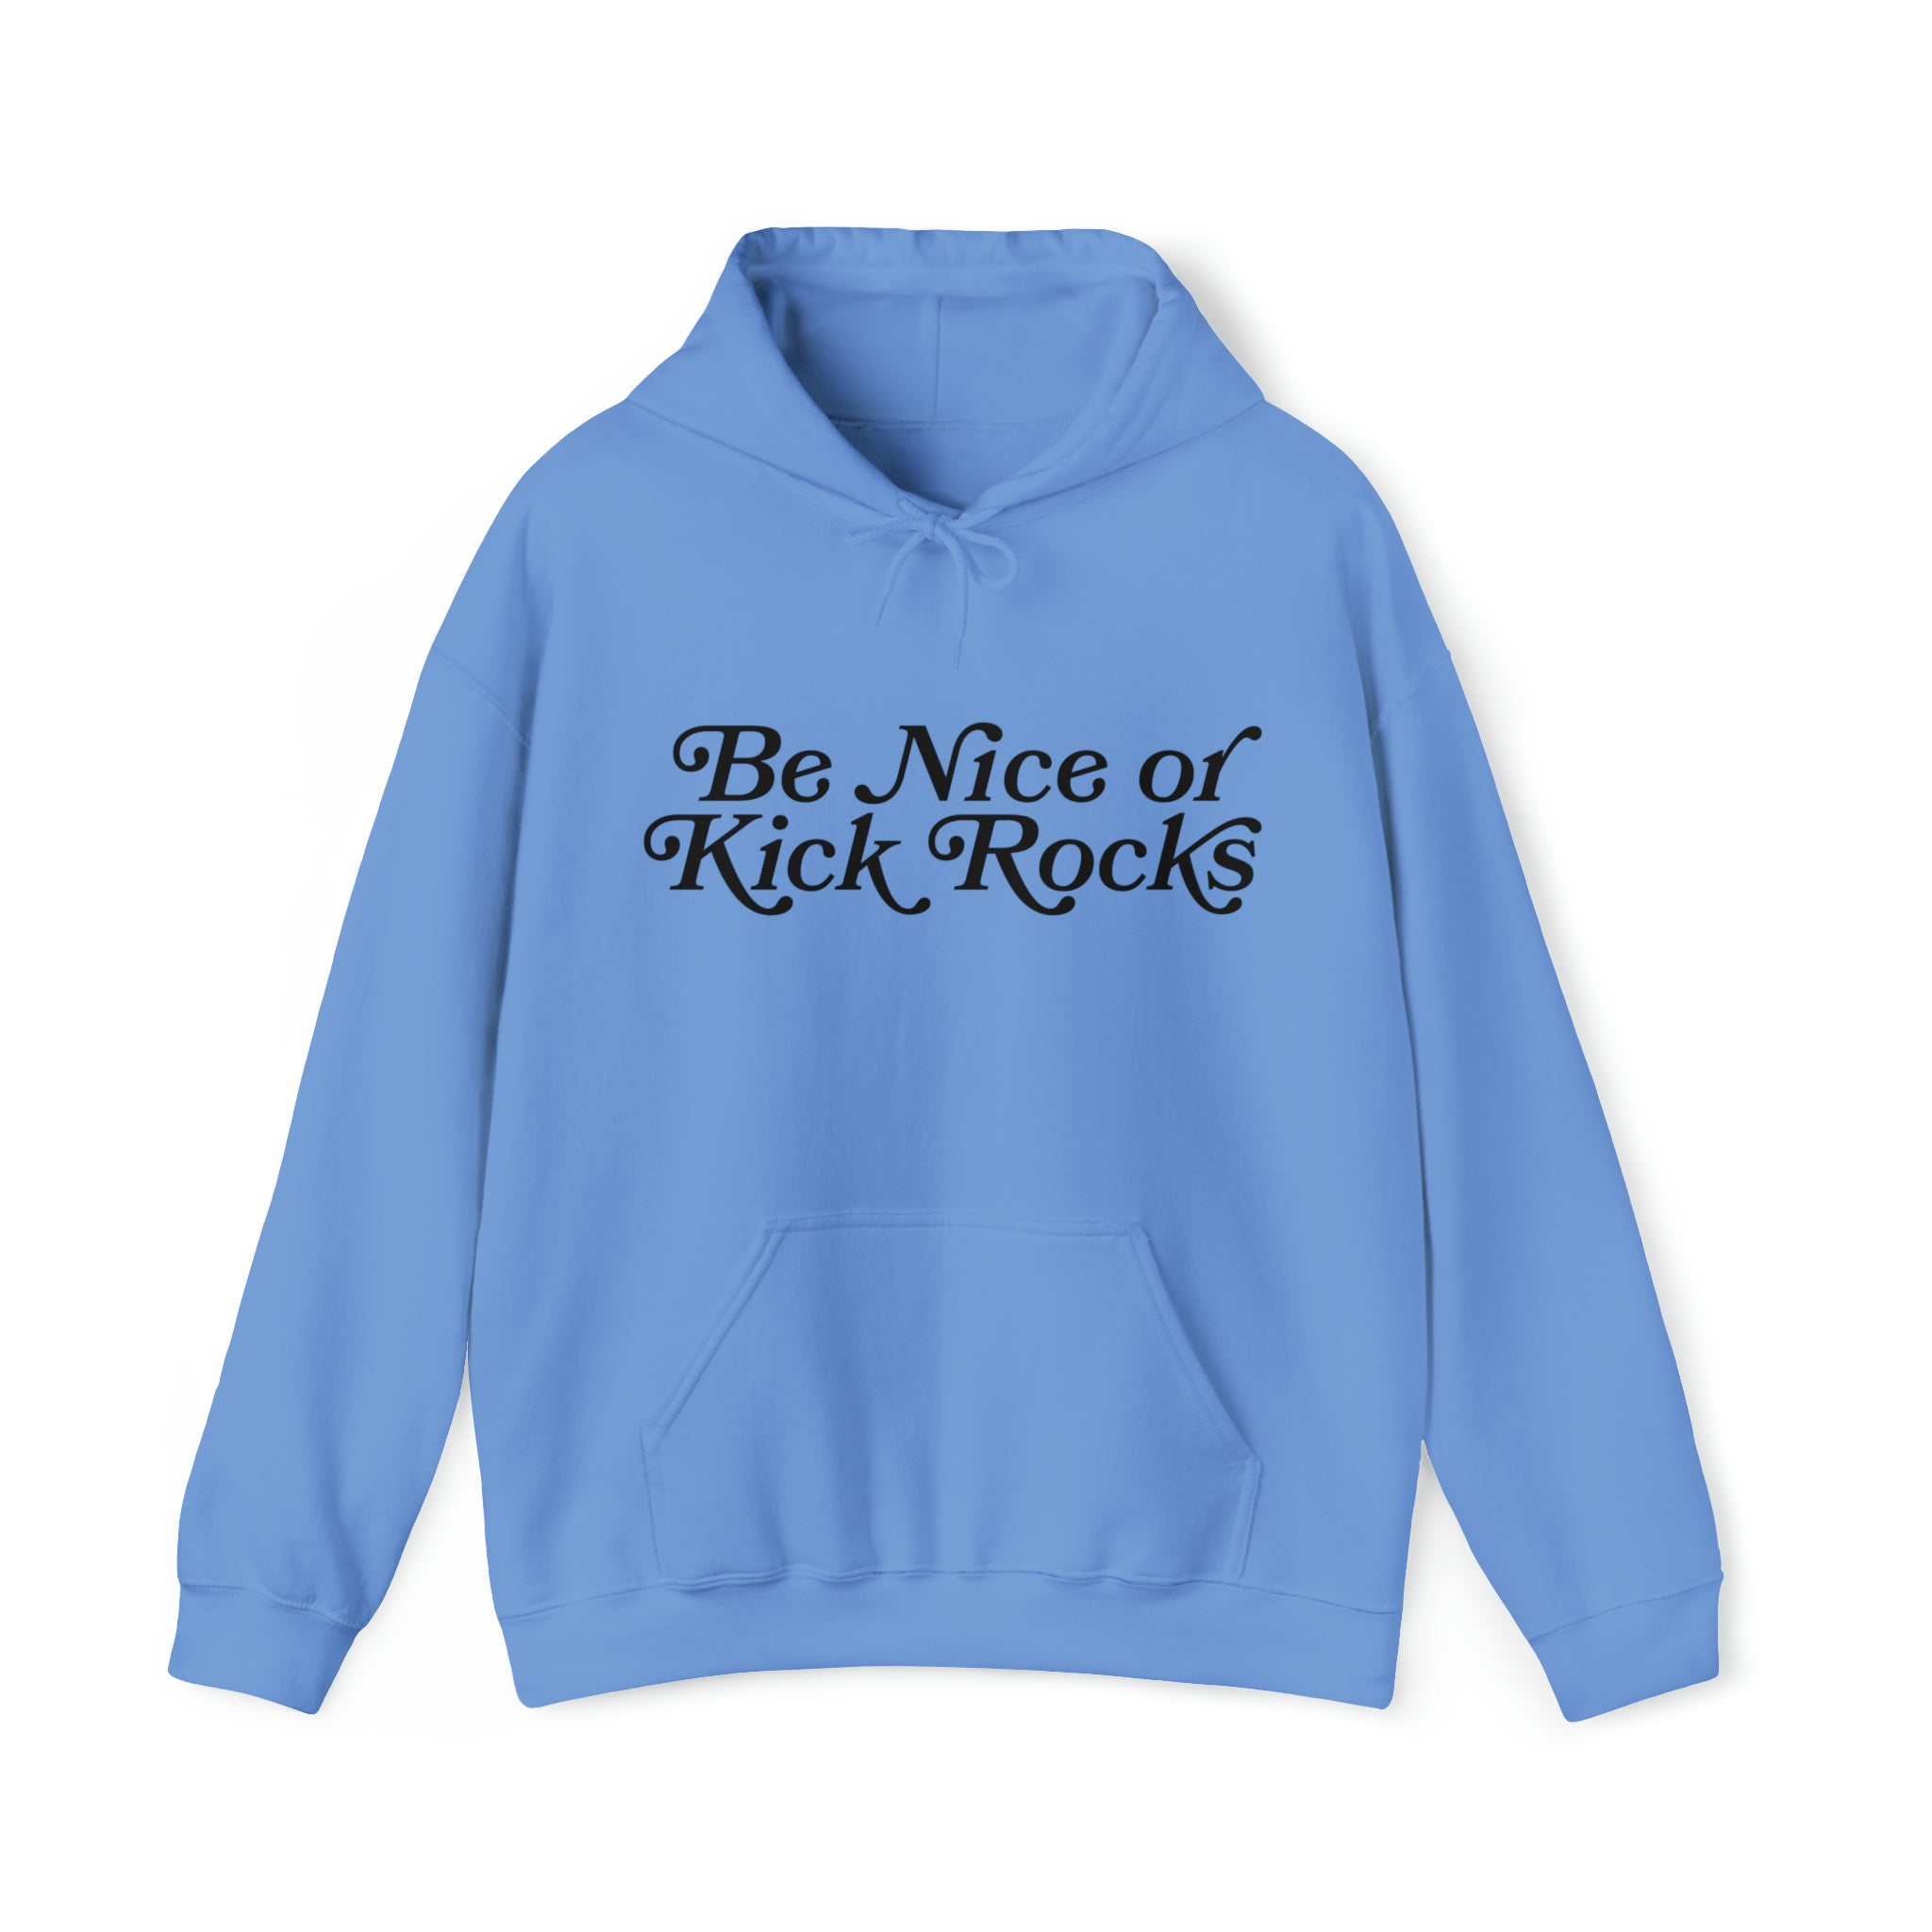 Be Nice or Kick Rocks Hoodie Sweatshirt – Stylish Comfort